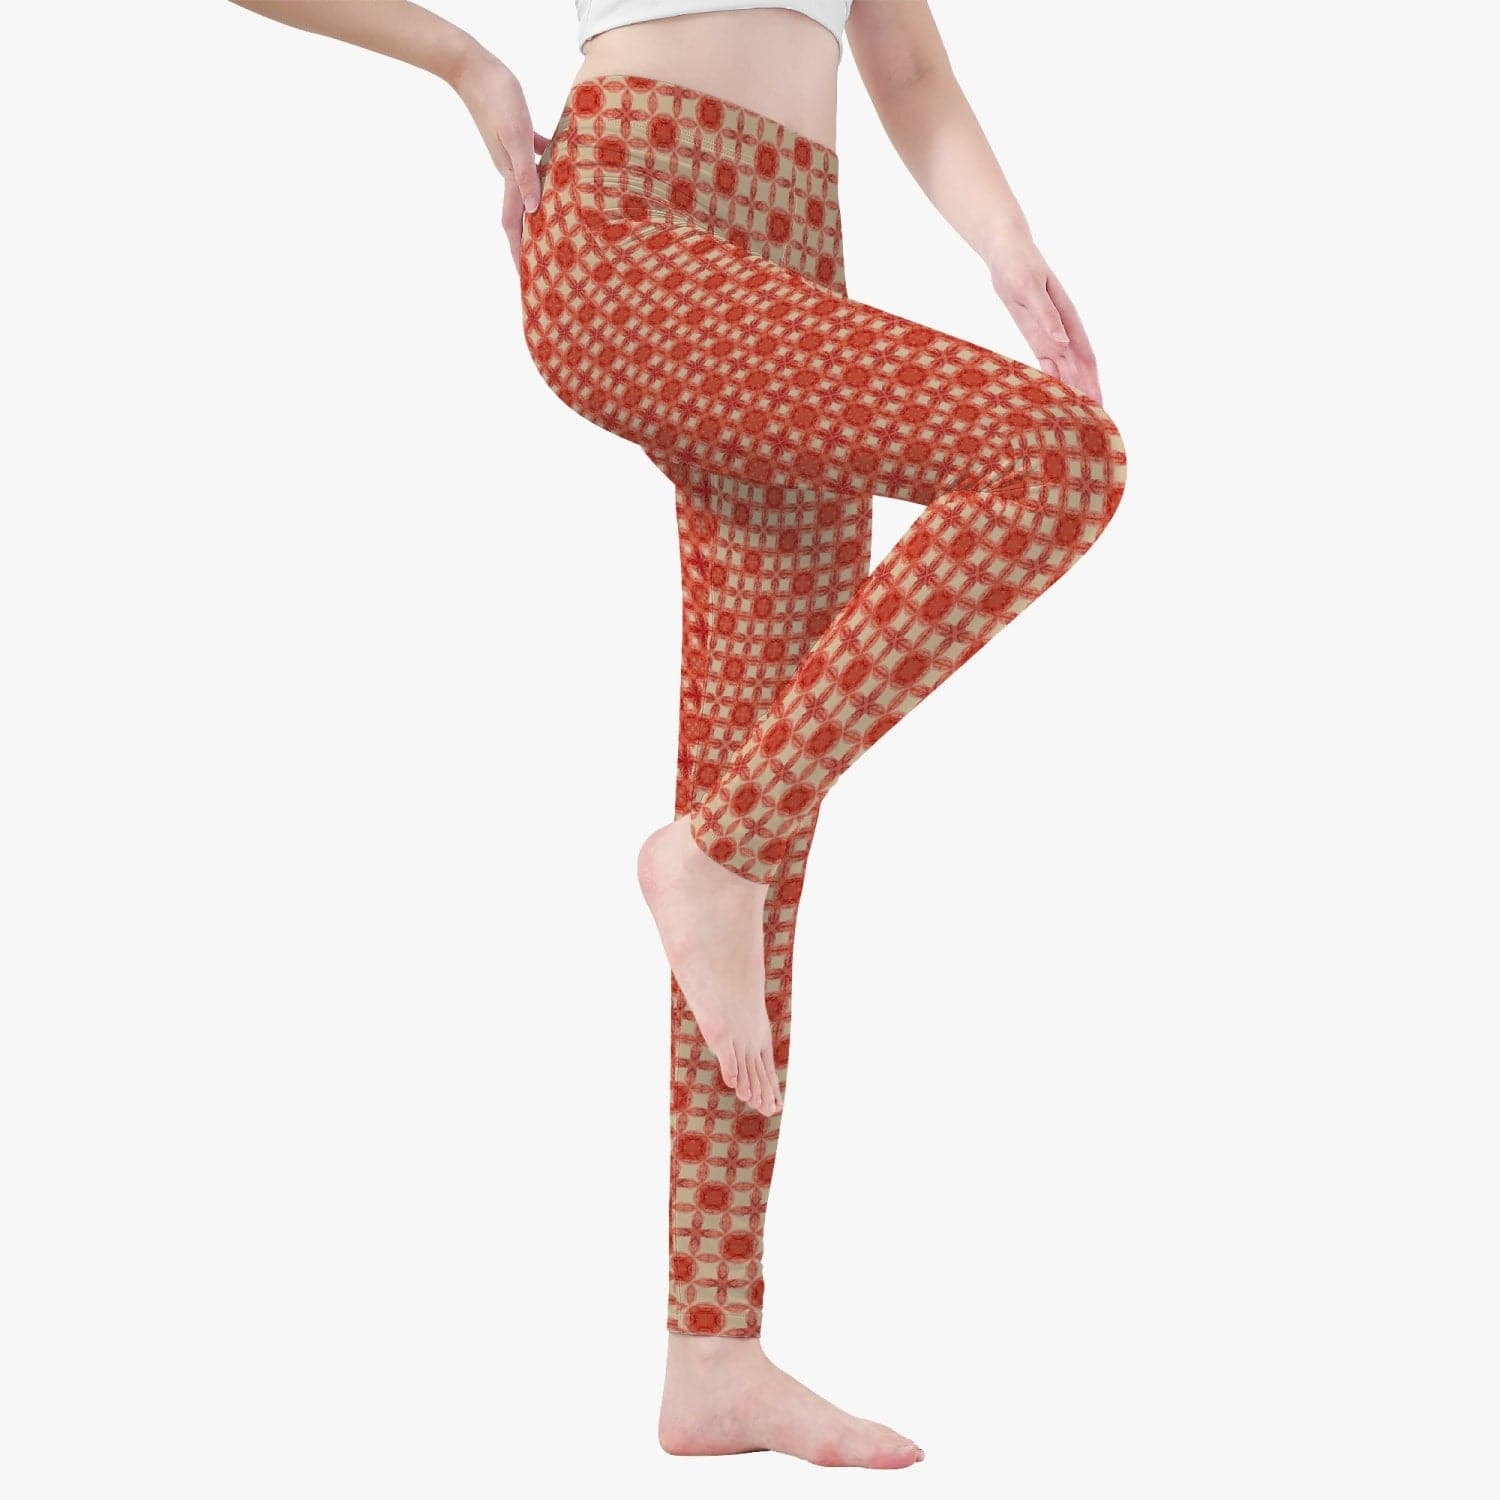 Soft Red Buttercup Yoga Pants/Leggins by Sensus Studio Design